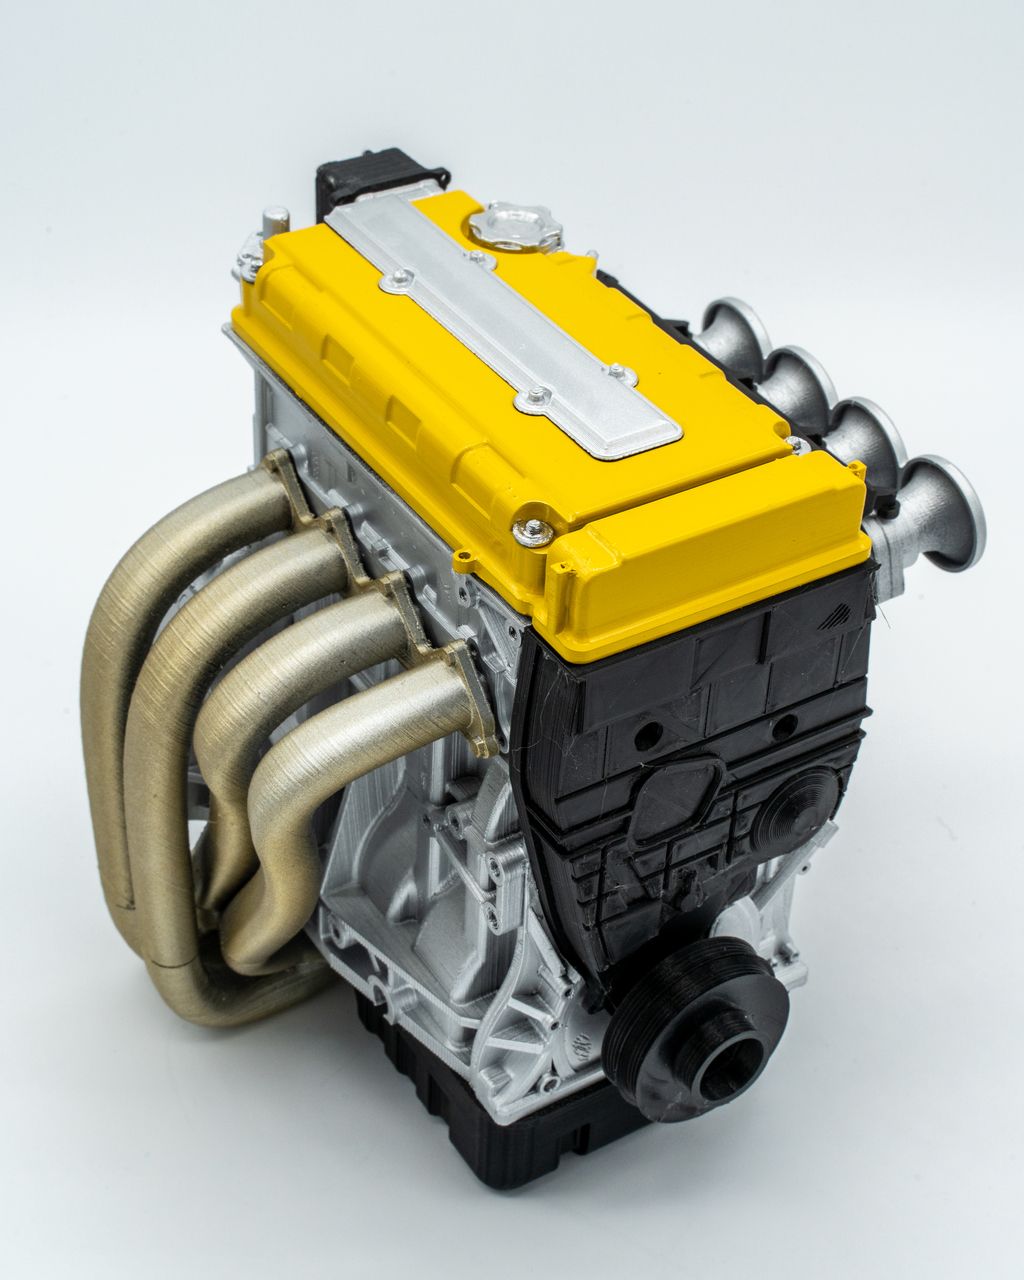 1/4 B-Series (B16/B18) SPOON Scale Engine – Assembled